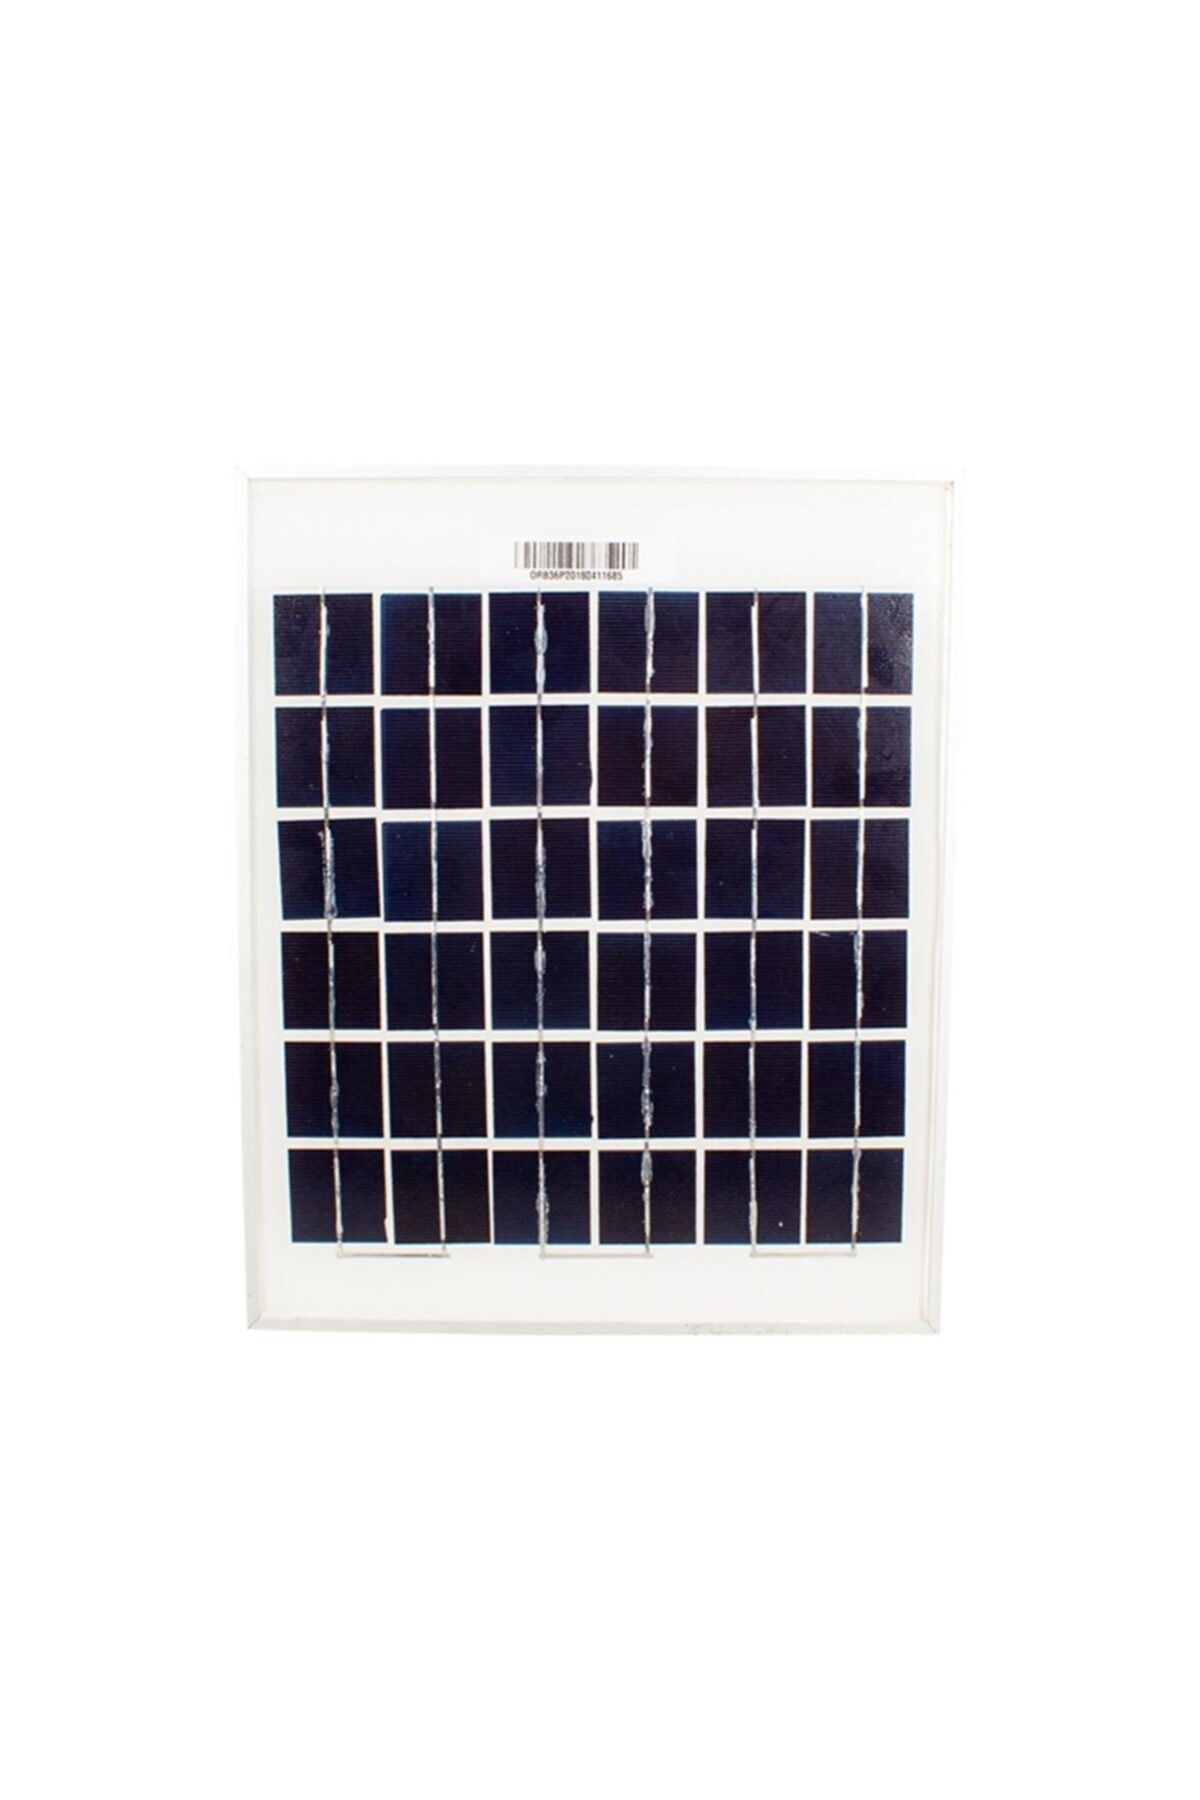 Genel Markalar Ts-m364-12 12 Watt Monokristal Güneş Enerji Paneli (254x364x25m)